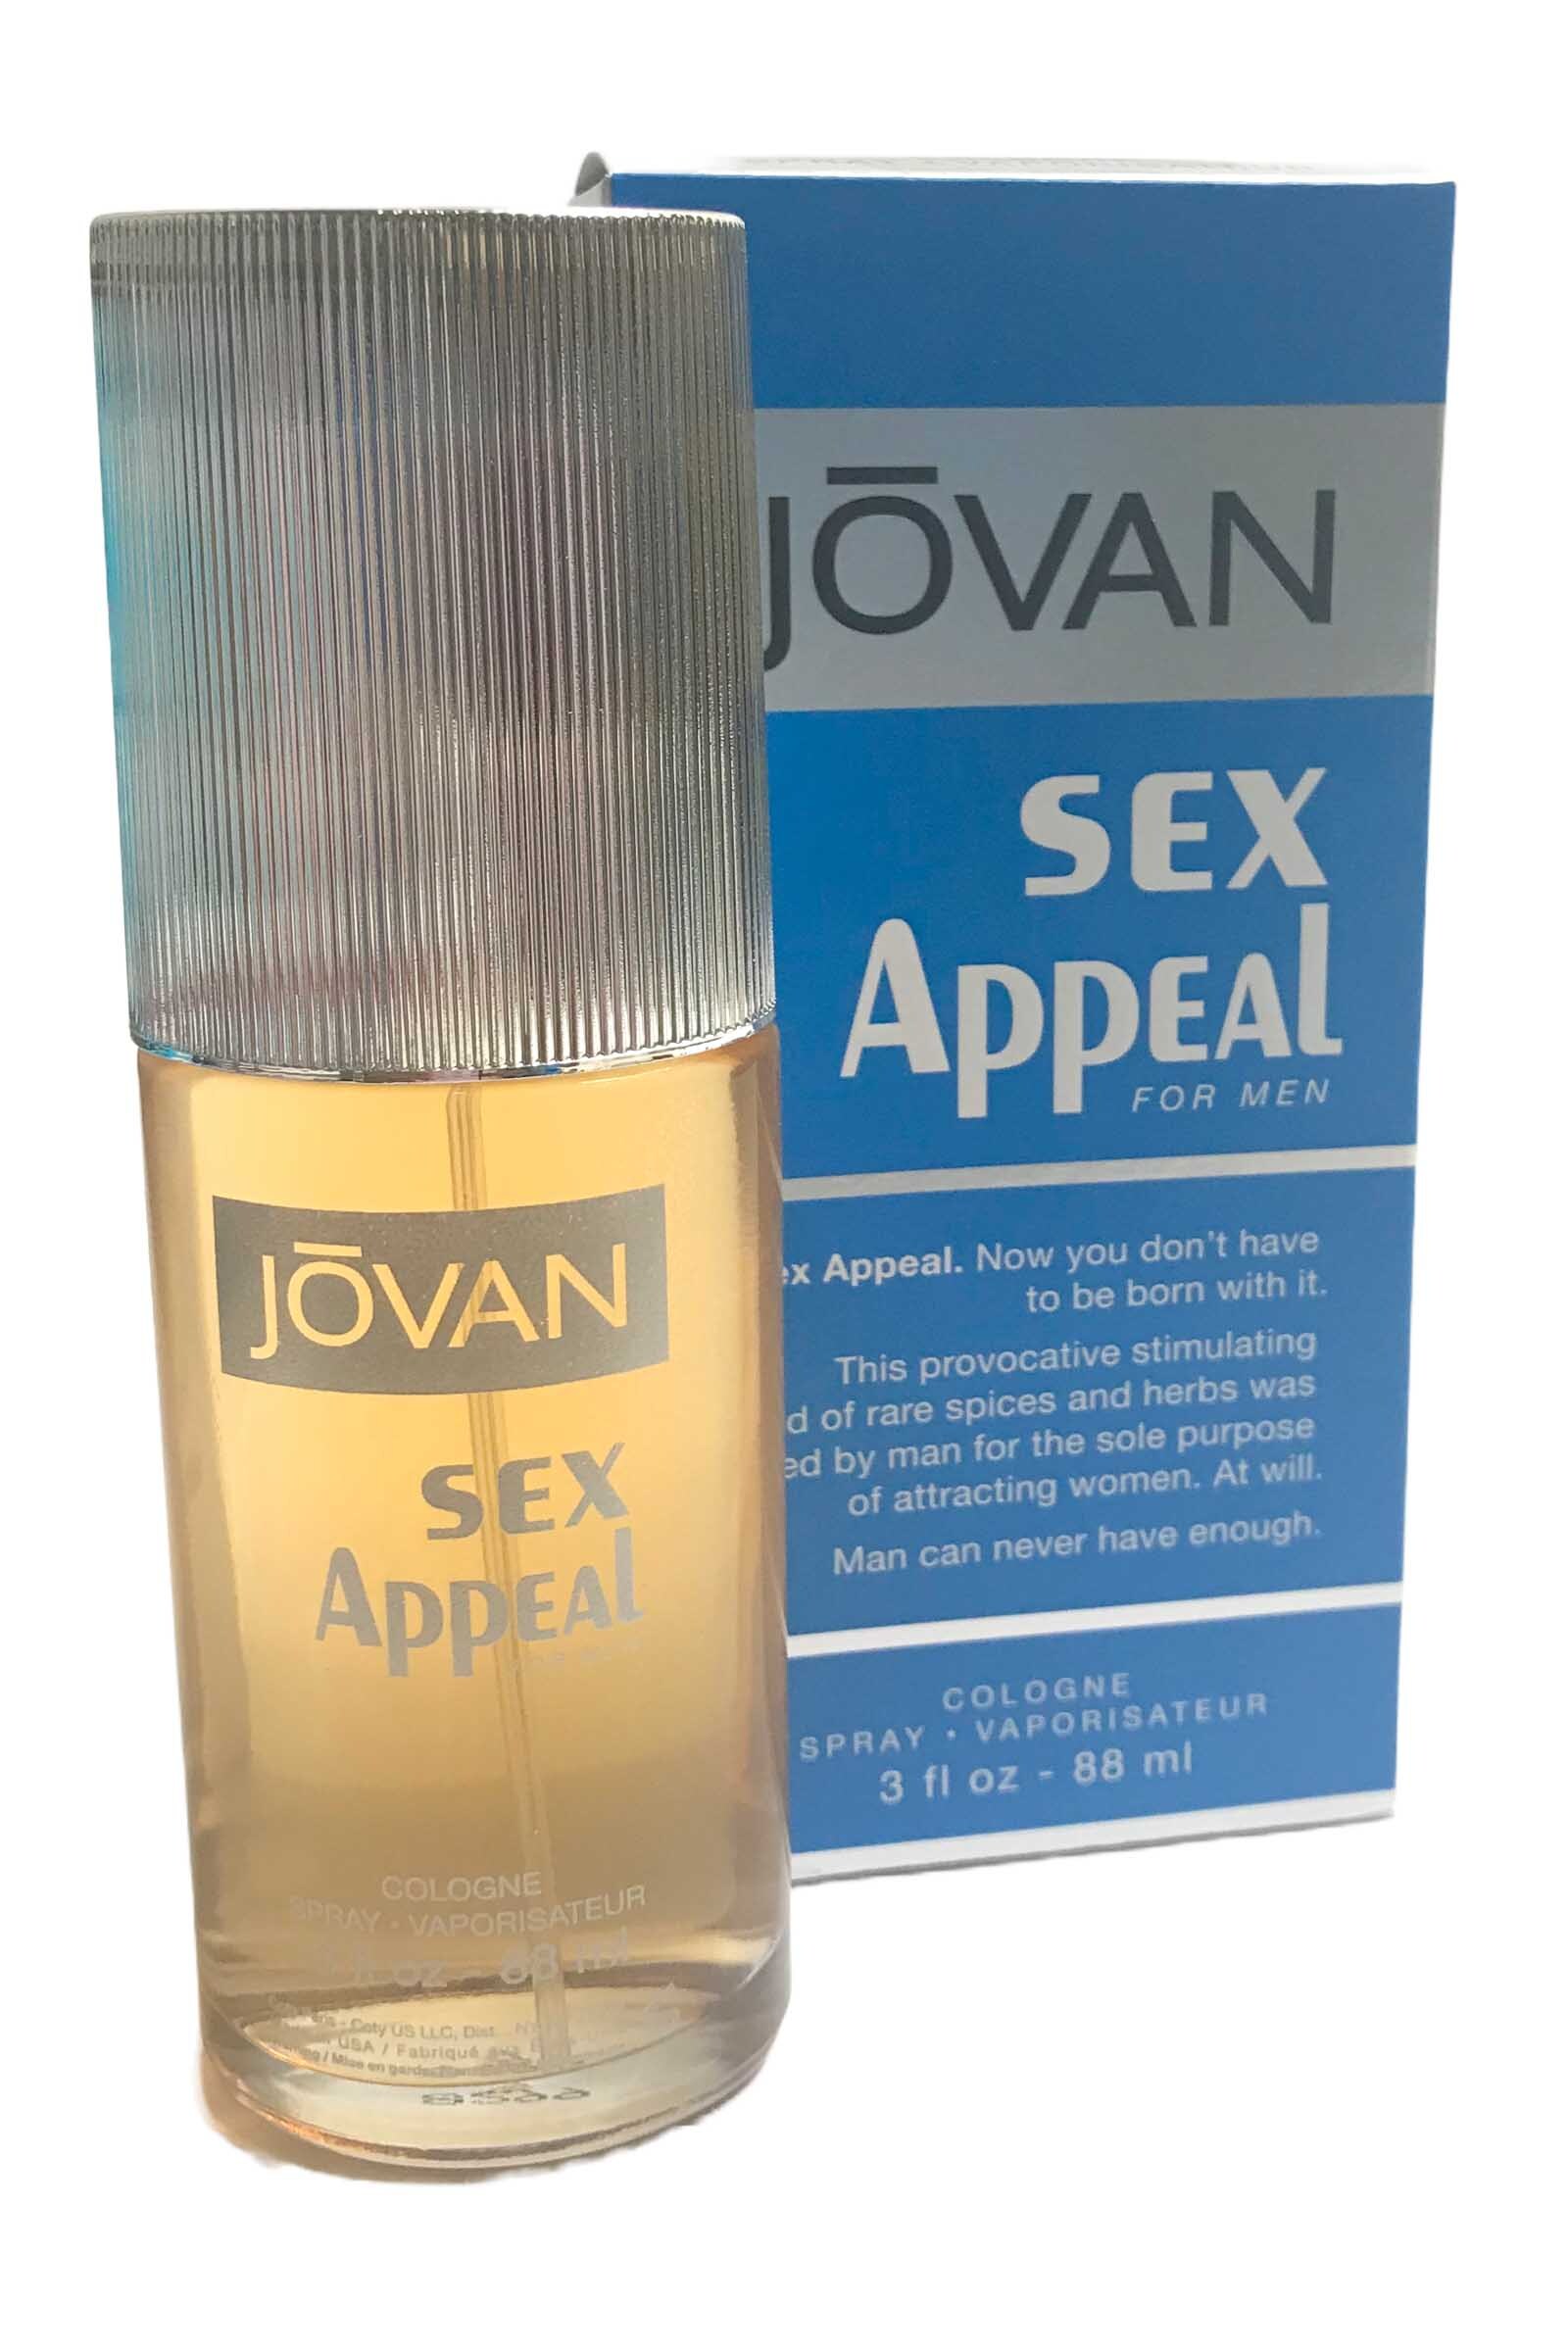 Jovan Sex Appeal for Men Cologne Spray 88ml Mens Fragrance | eBay